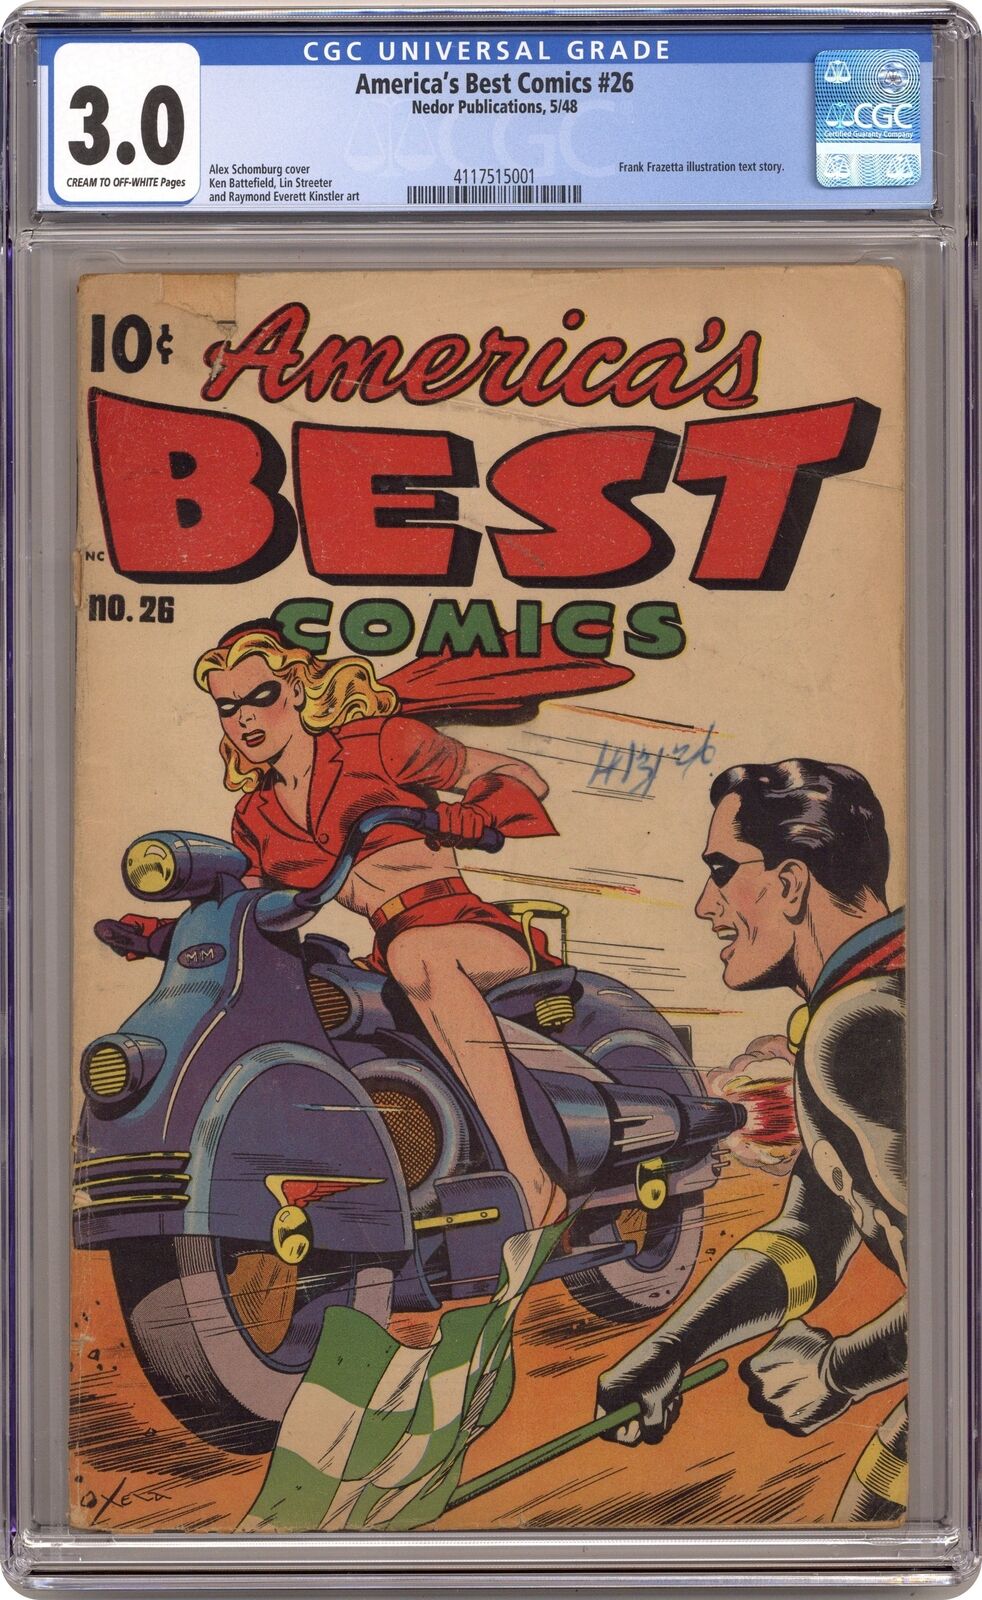 America's Best Comics #26 CGC 3.0 1948 4117515001